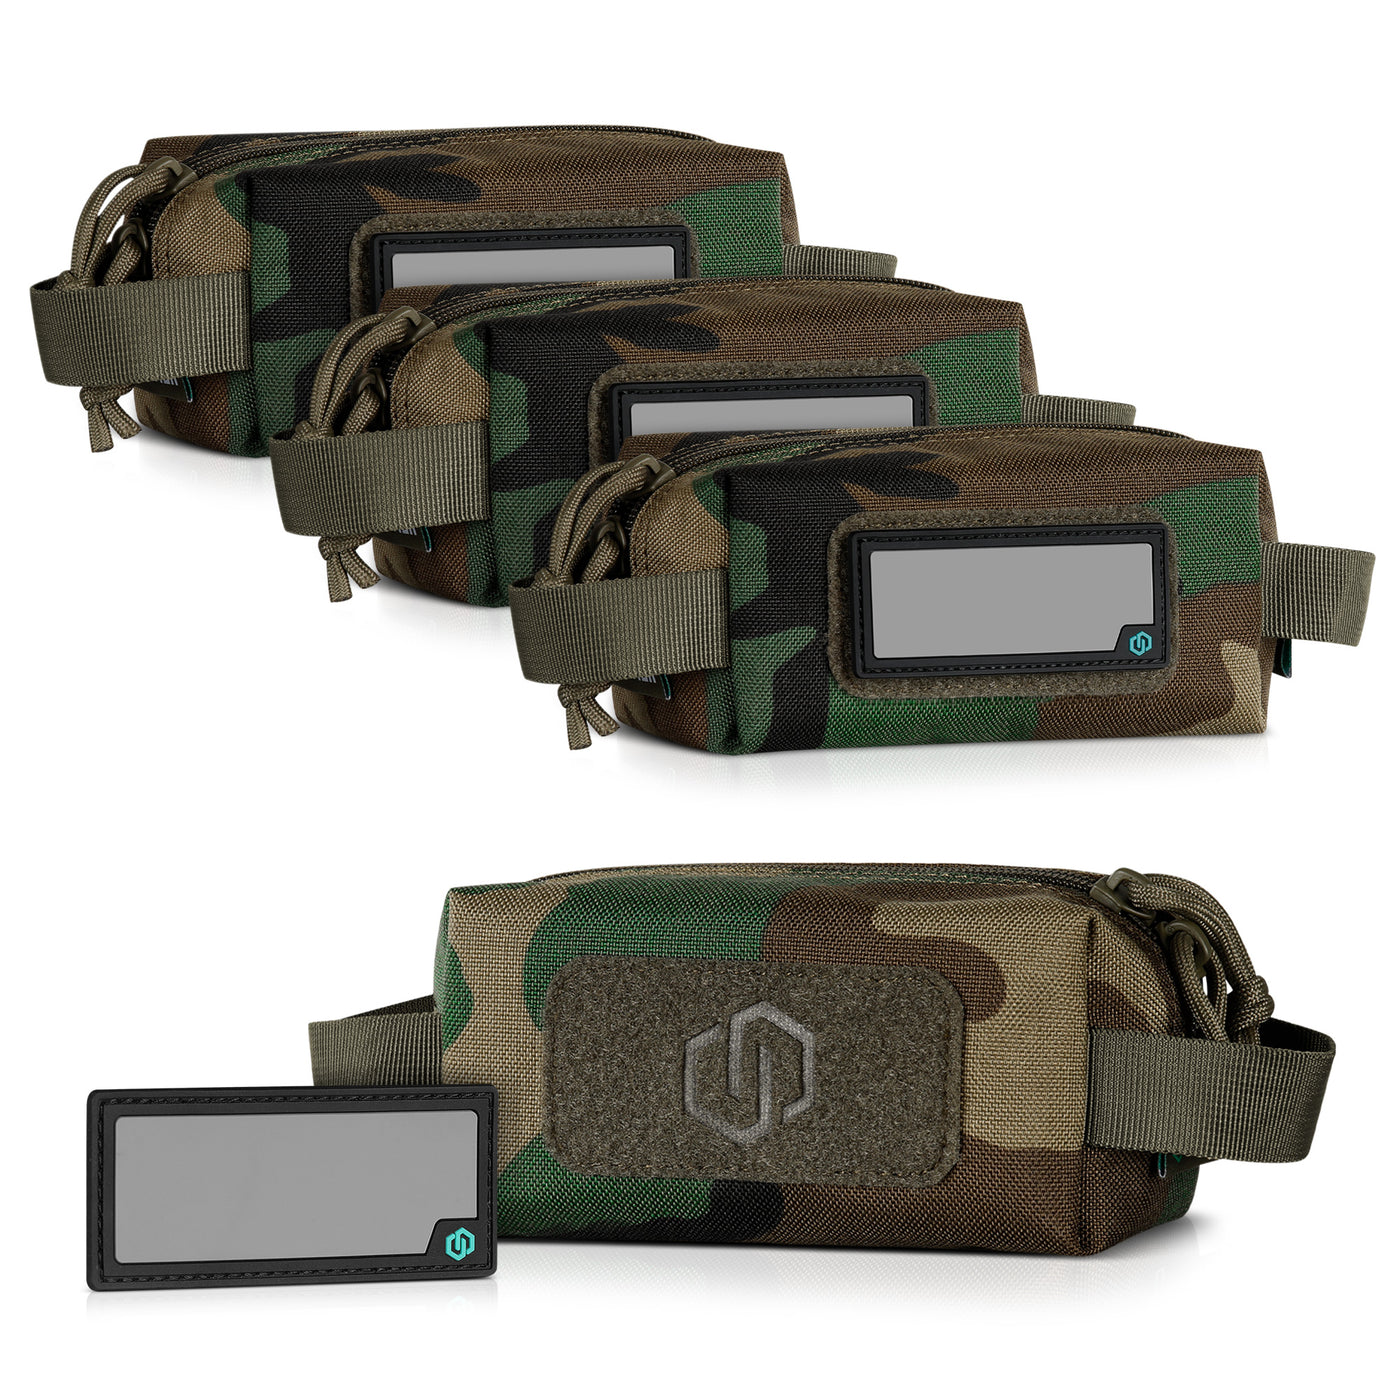 Loose Sac - Ammo Bag Small - M81 Woodland Camo - 4-Pack